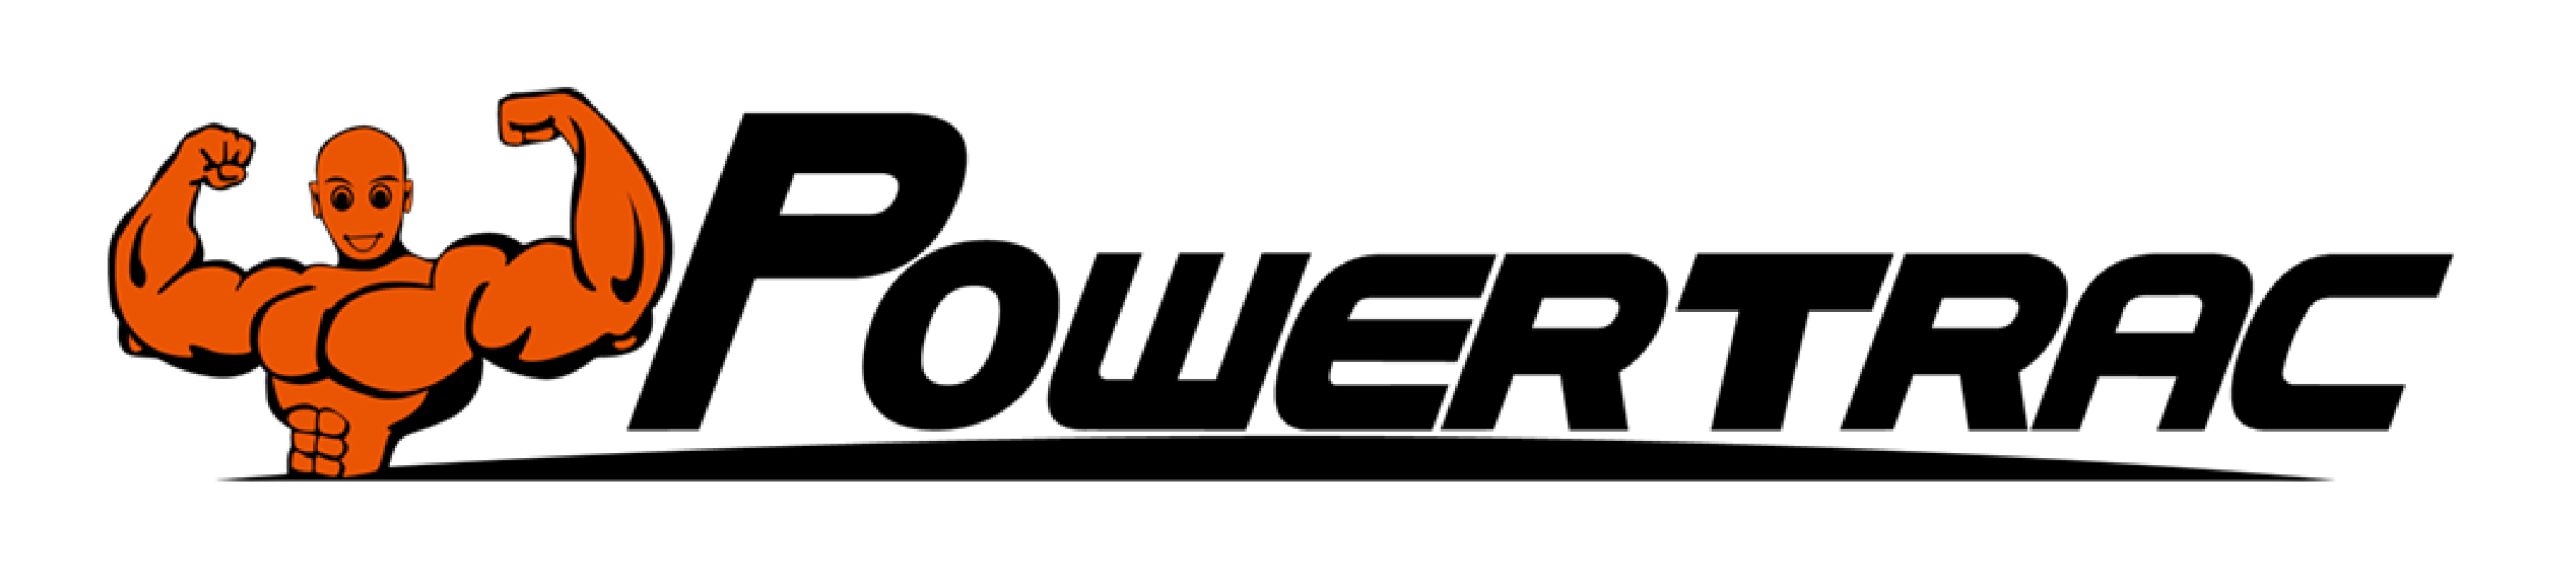 LOGO-POWERTRAC-scaled.jpg